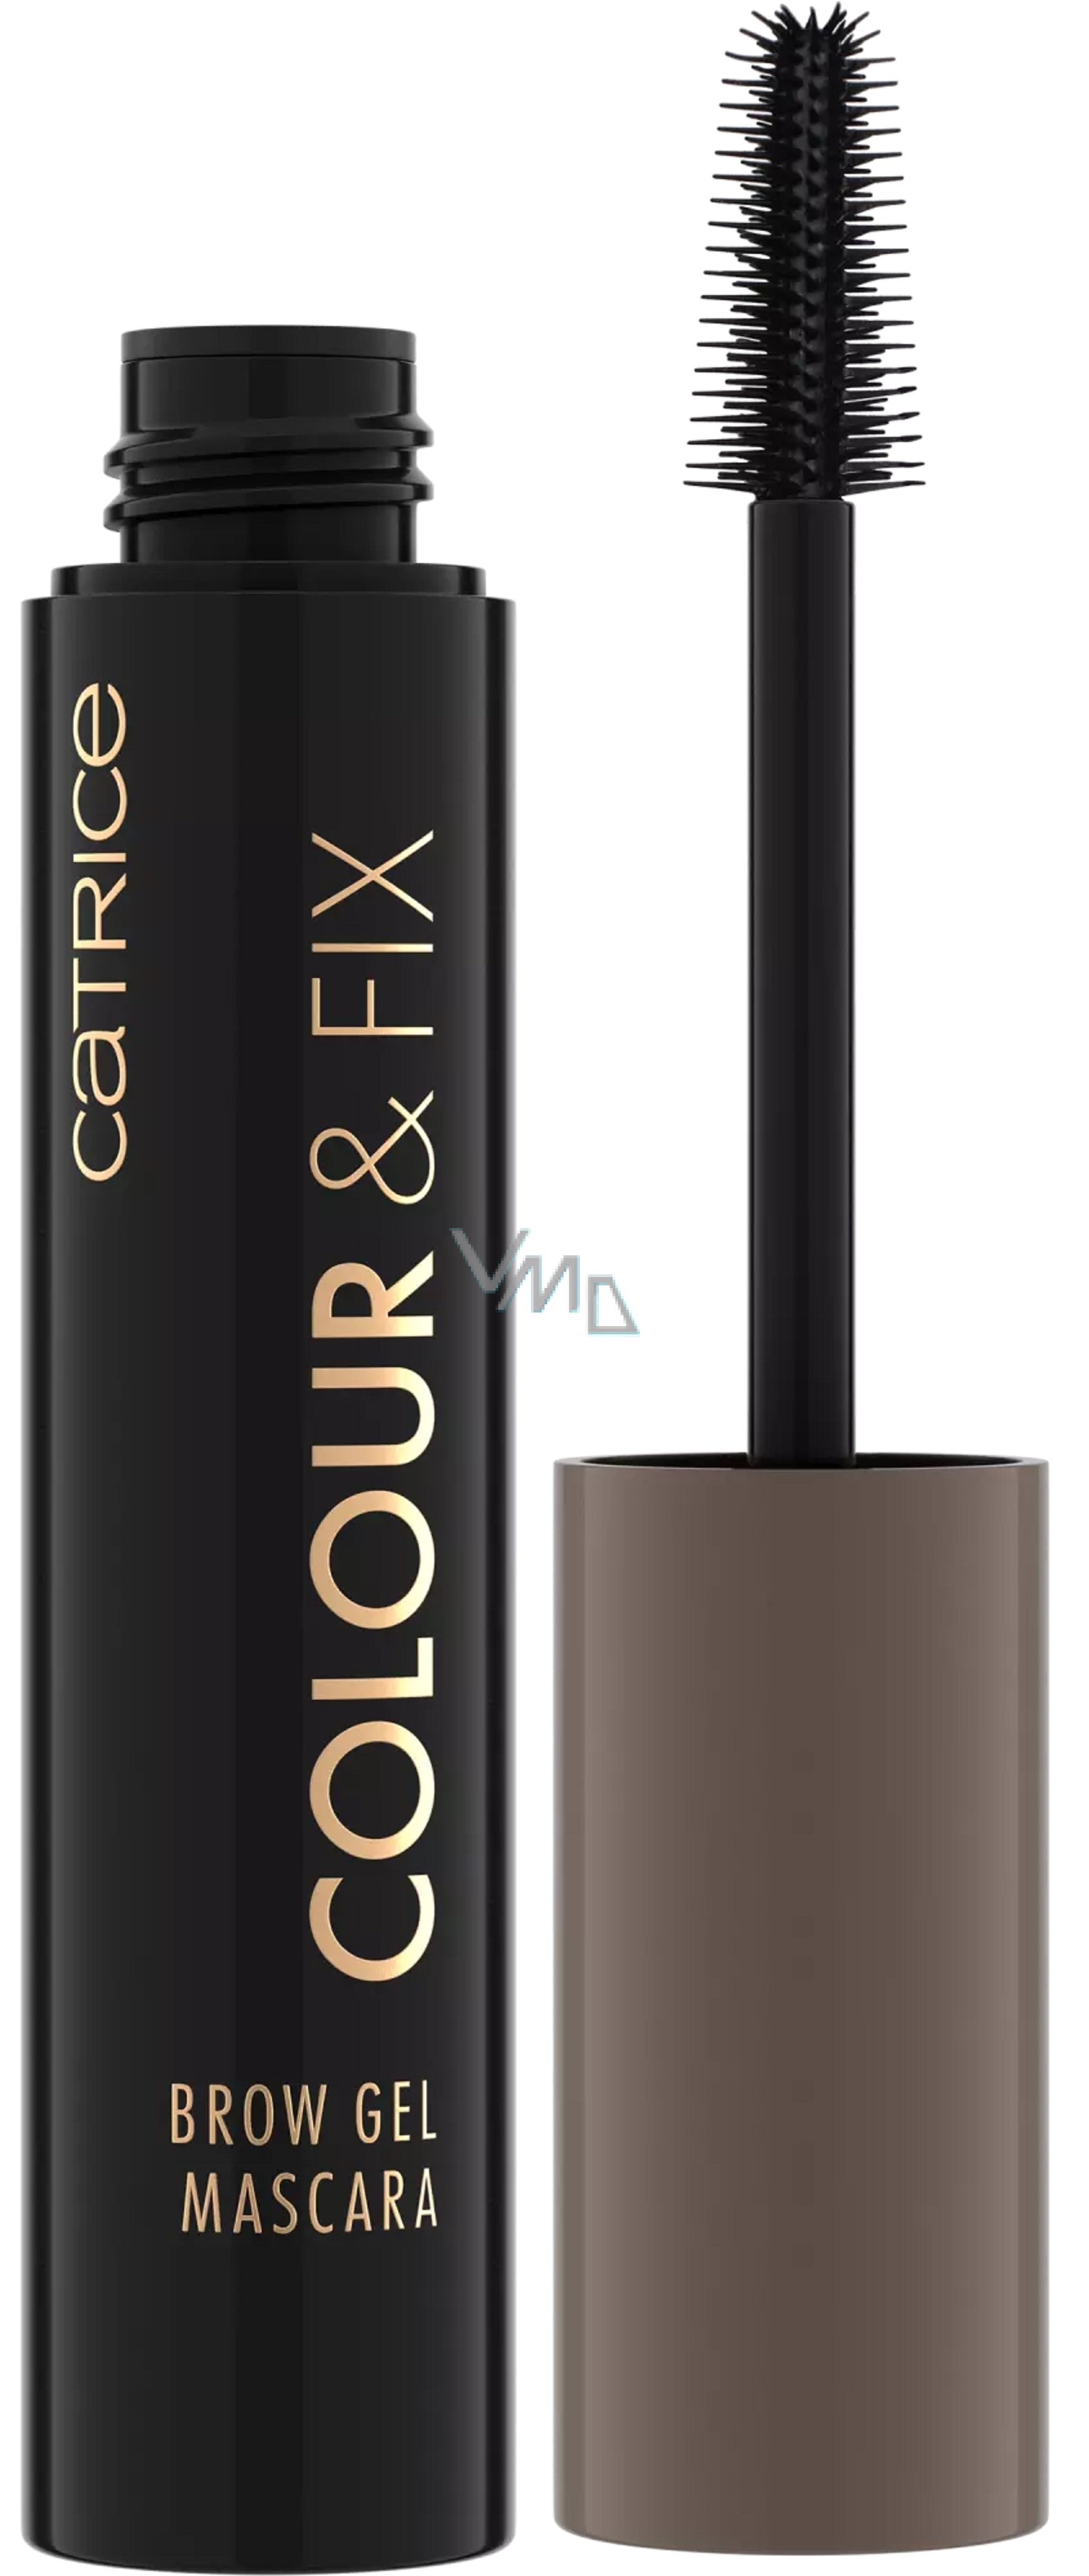 & 030 5 parfumerie - Brown Colour Gel Mascara Eyebrow VMD ml drogerie Dark Fix - Catrice